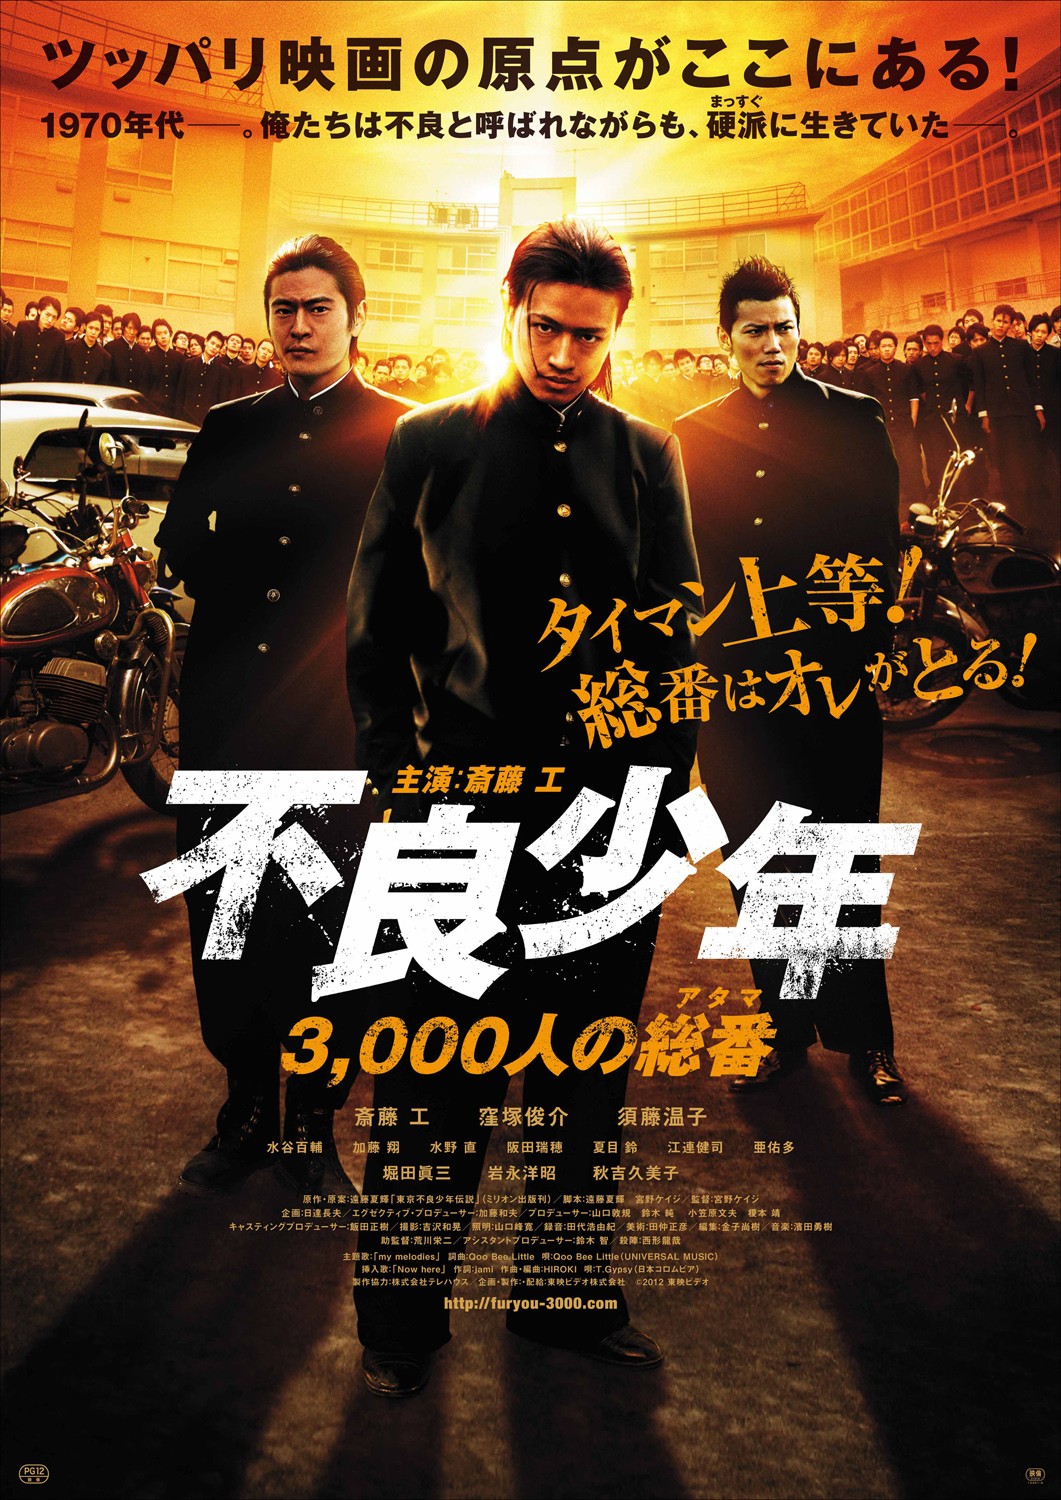 Extra Large Movie Poster Image for Furyou shounen: 3,000-nin no atama 